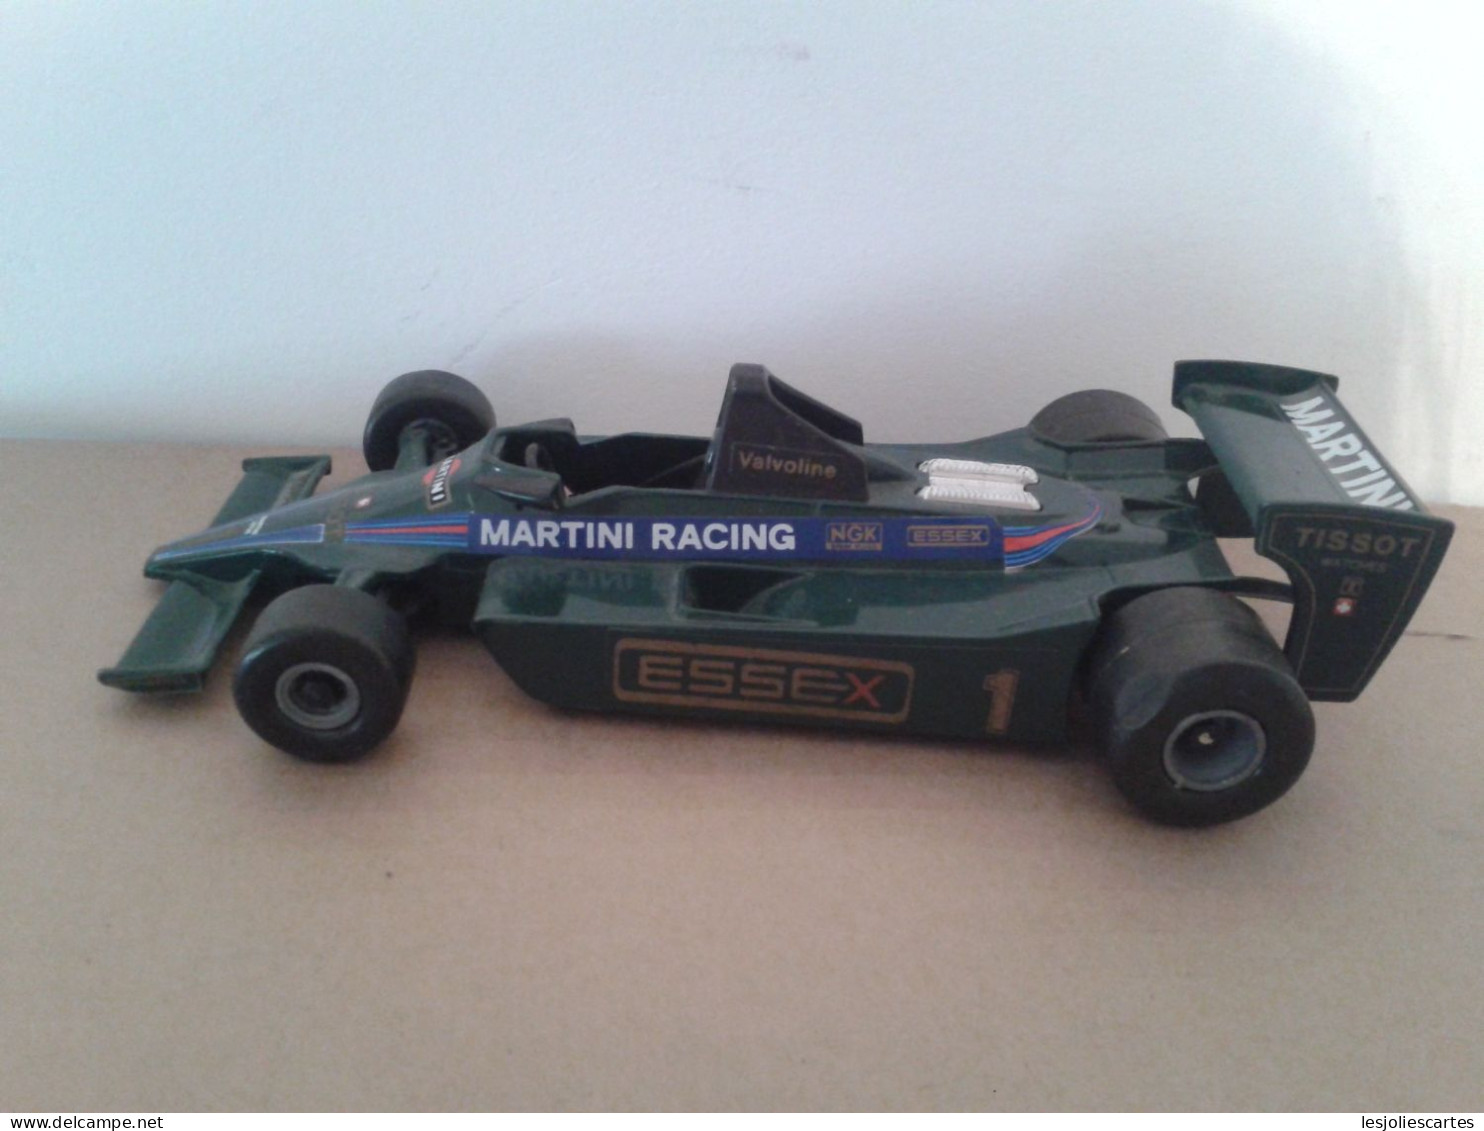 Polistil Lotus 79 Mk4 1/22 F1 Formule 1 Racing 1:22 Martini Racing Essex - Polistil